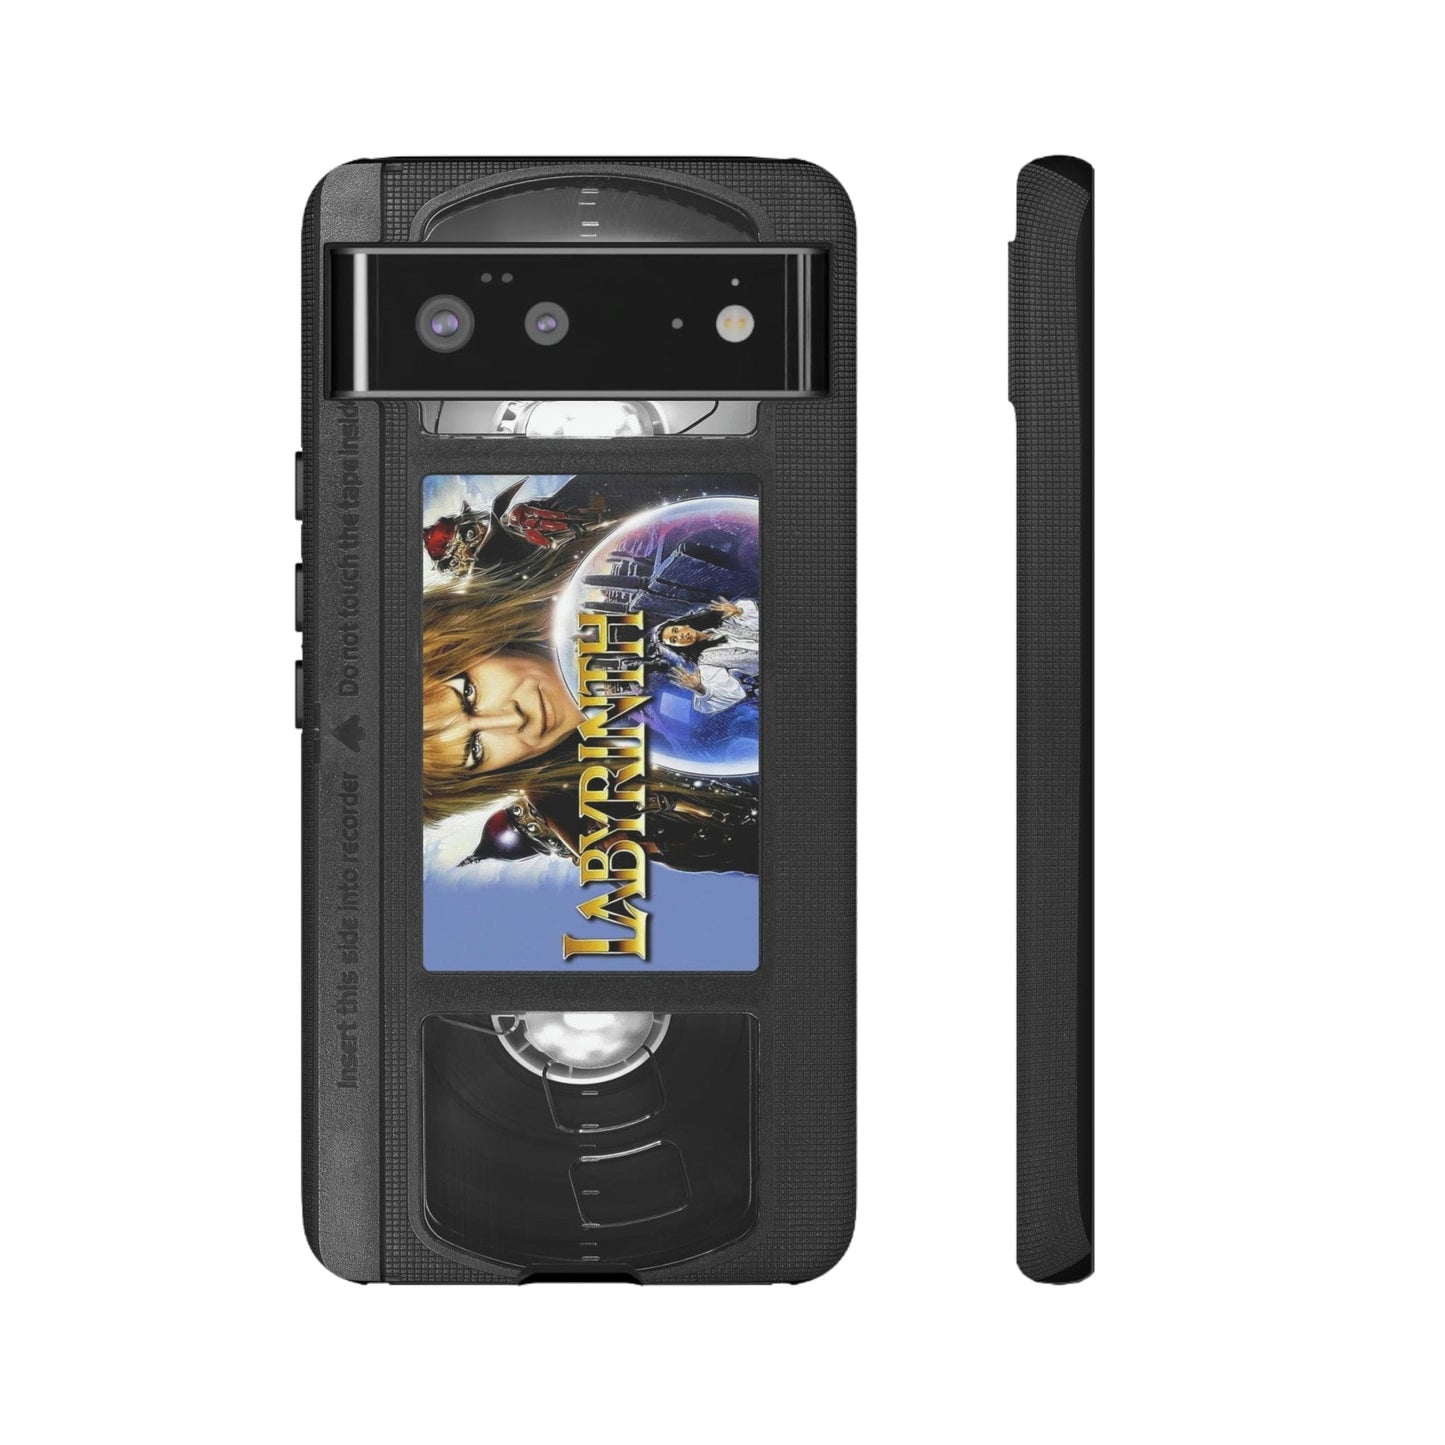 Labyrinth Impact Resistant VHS Phone Case